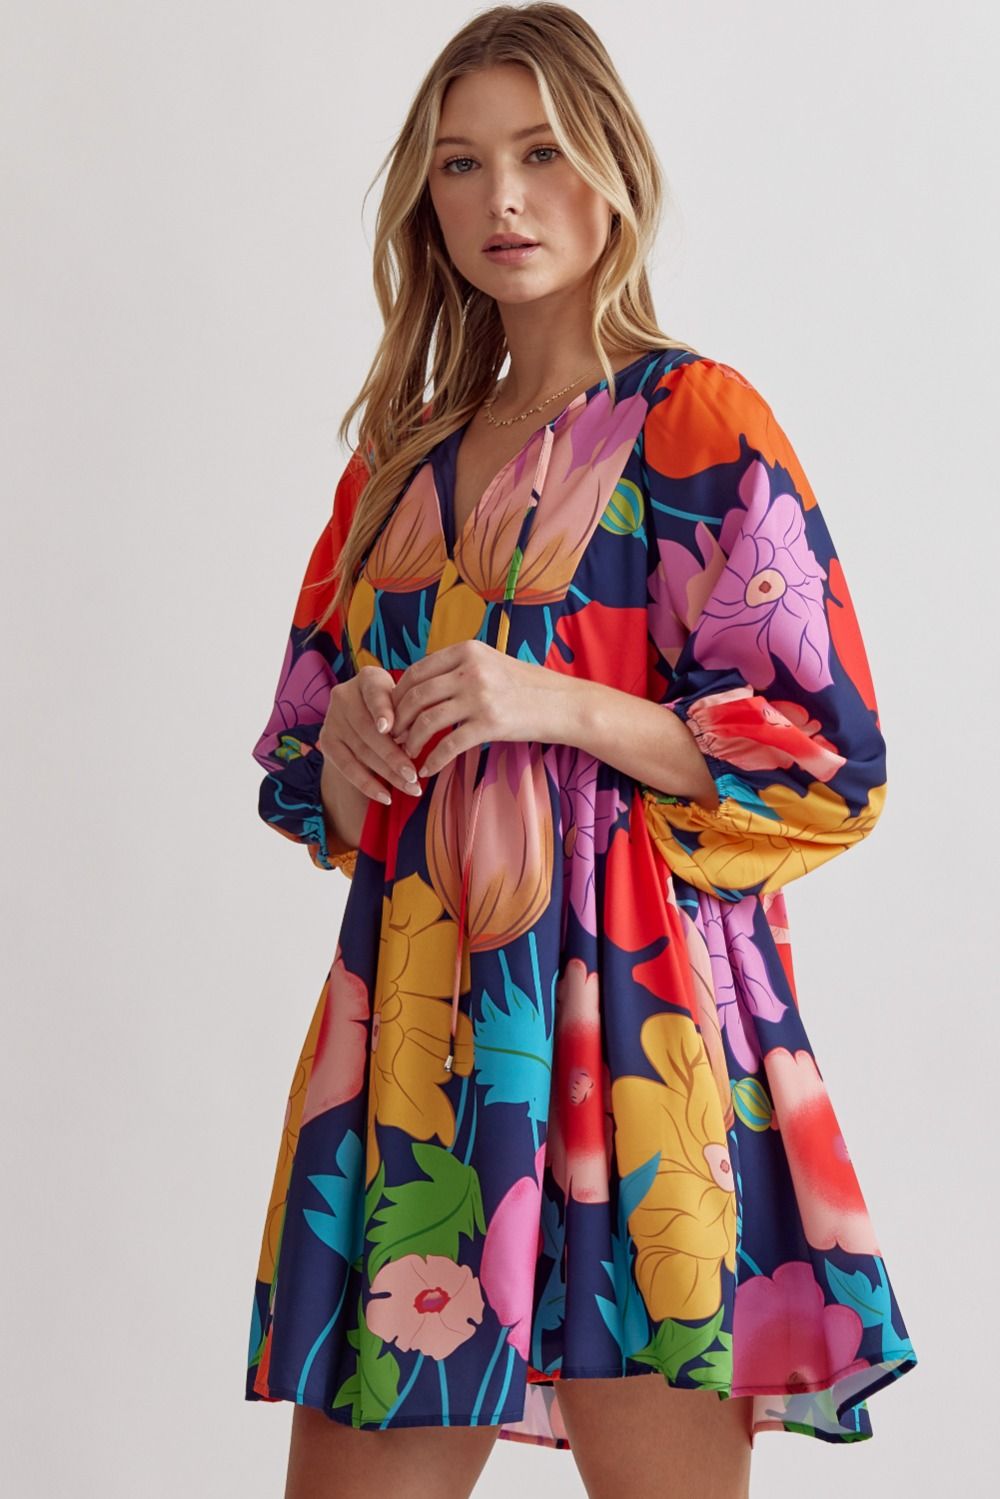 ENTRO INC Women's Dresses NAVY / S Floral Print Half Sleeve Mini Dress || David's Clothing D22262